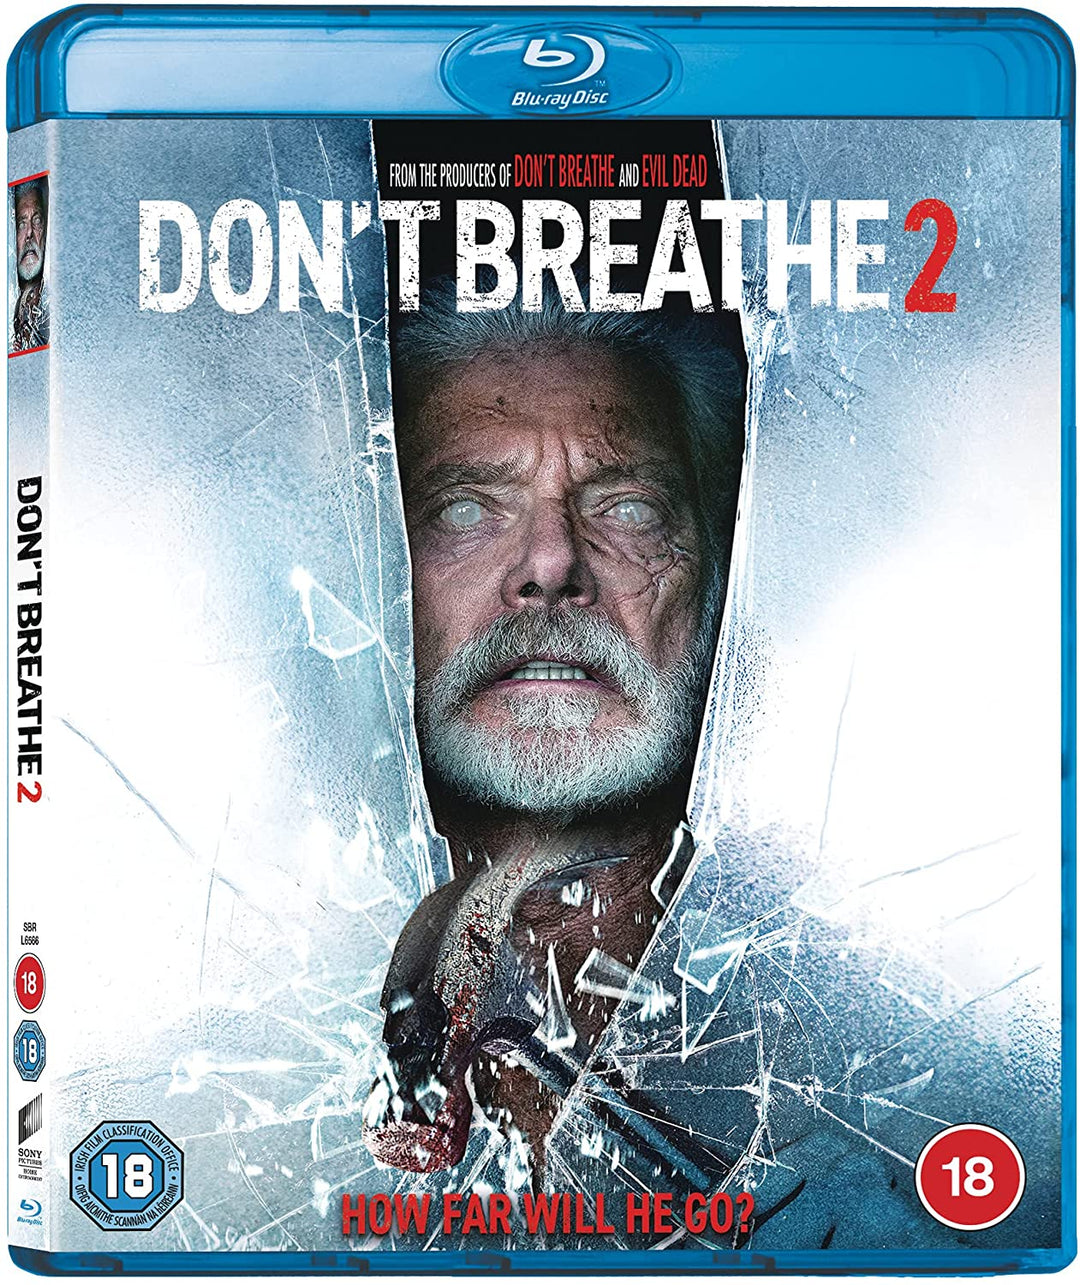 Don't Breathe 2 [2021] - Horror/Thriller [Blu-ray]